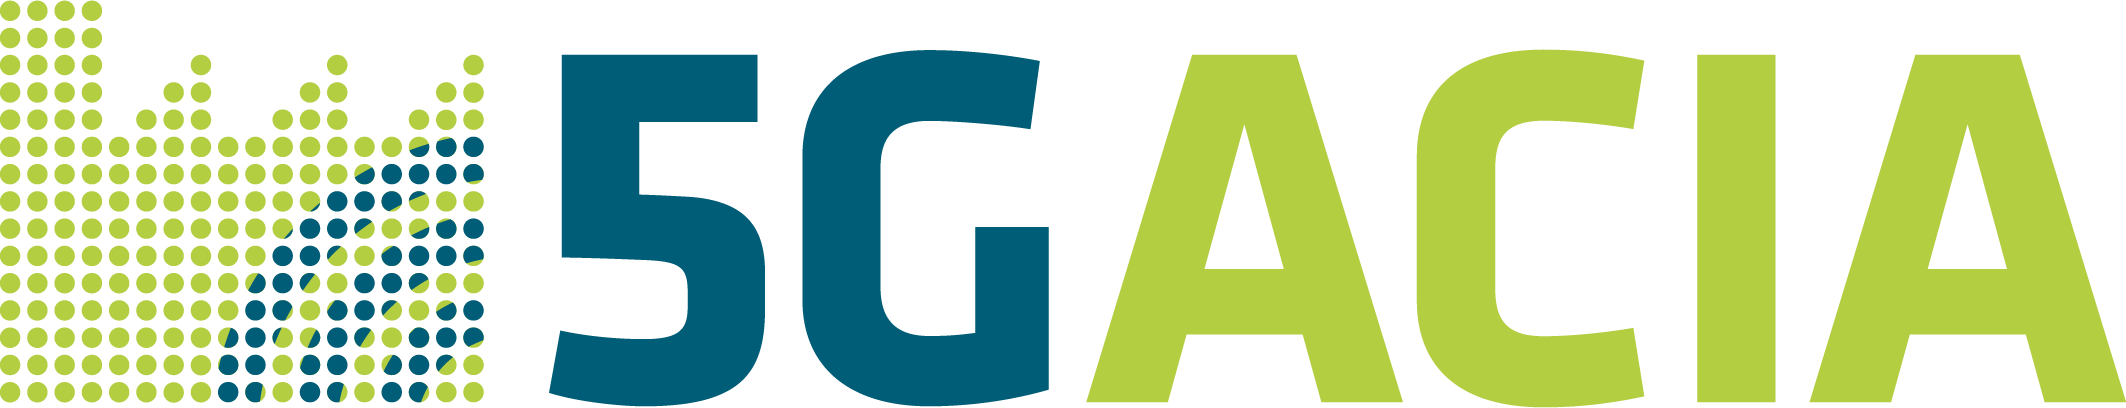 5G-ACIA_Logo